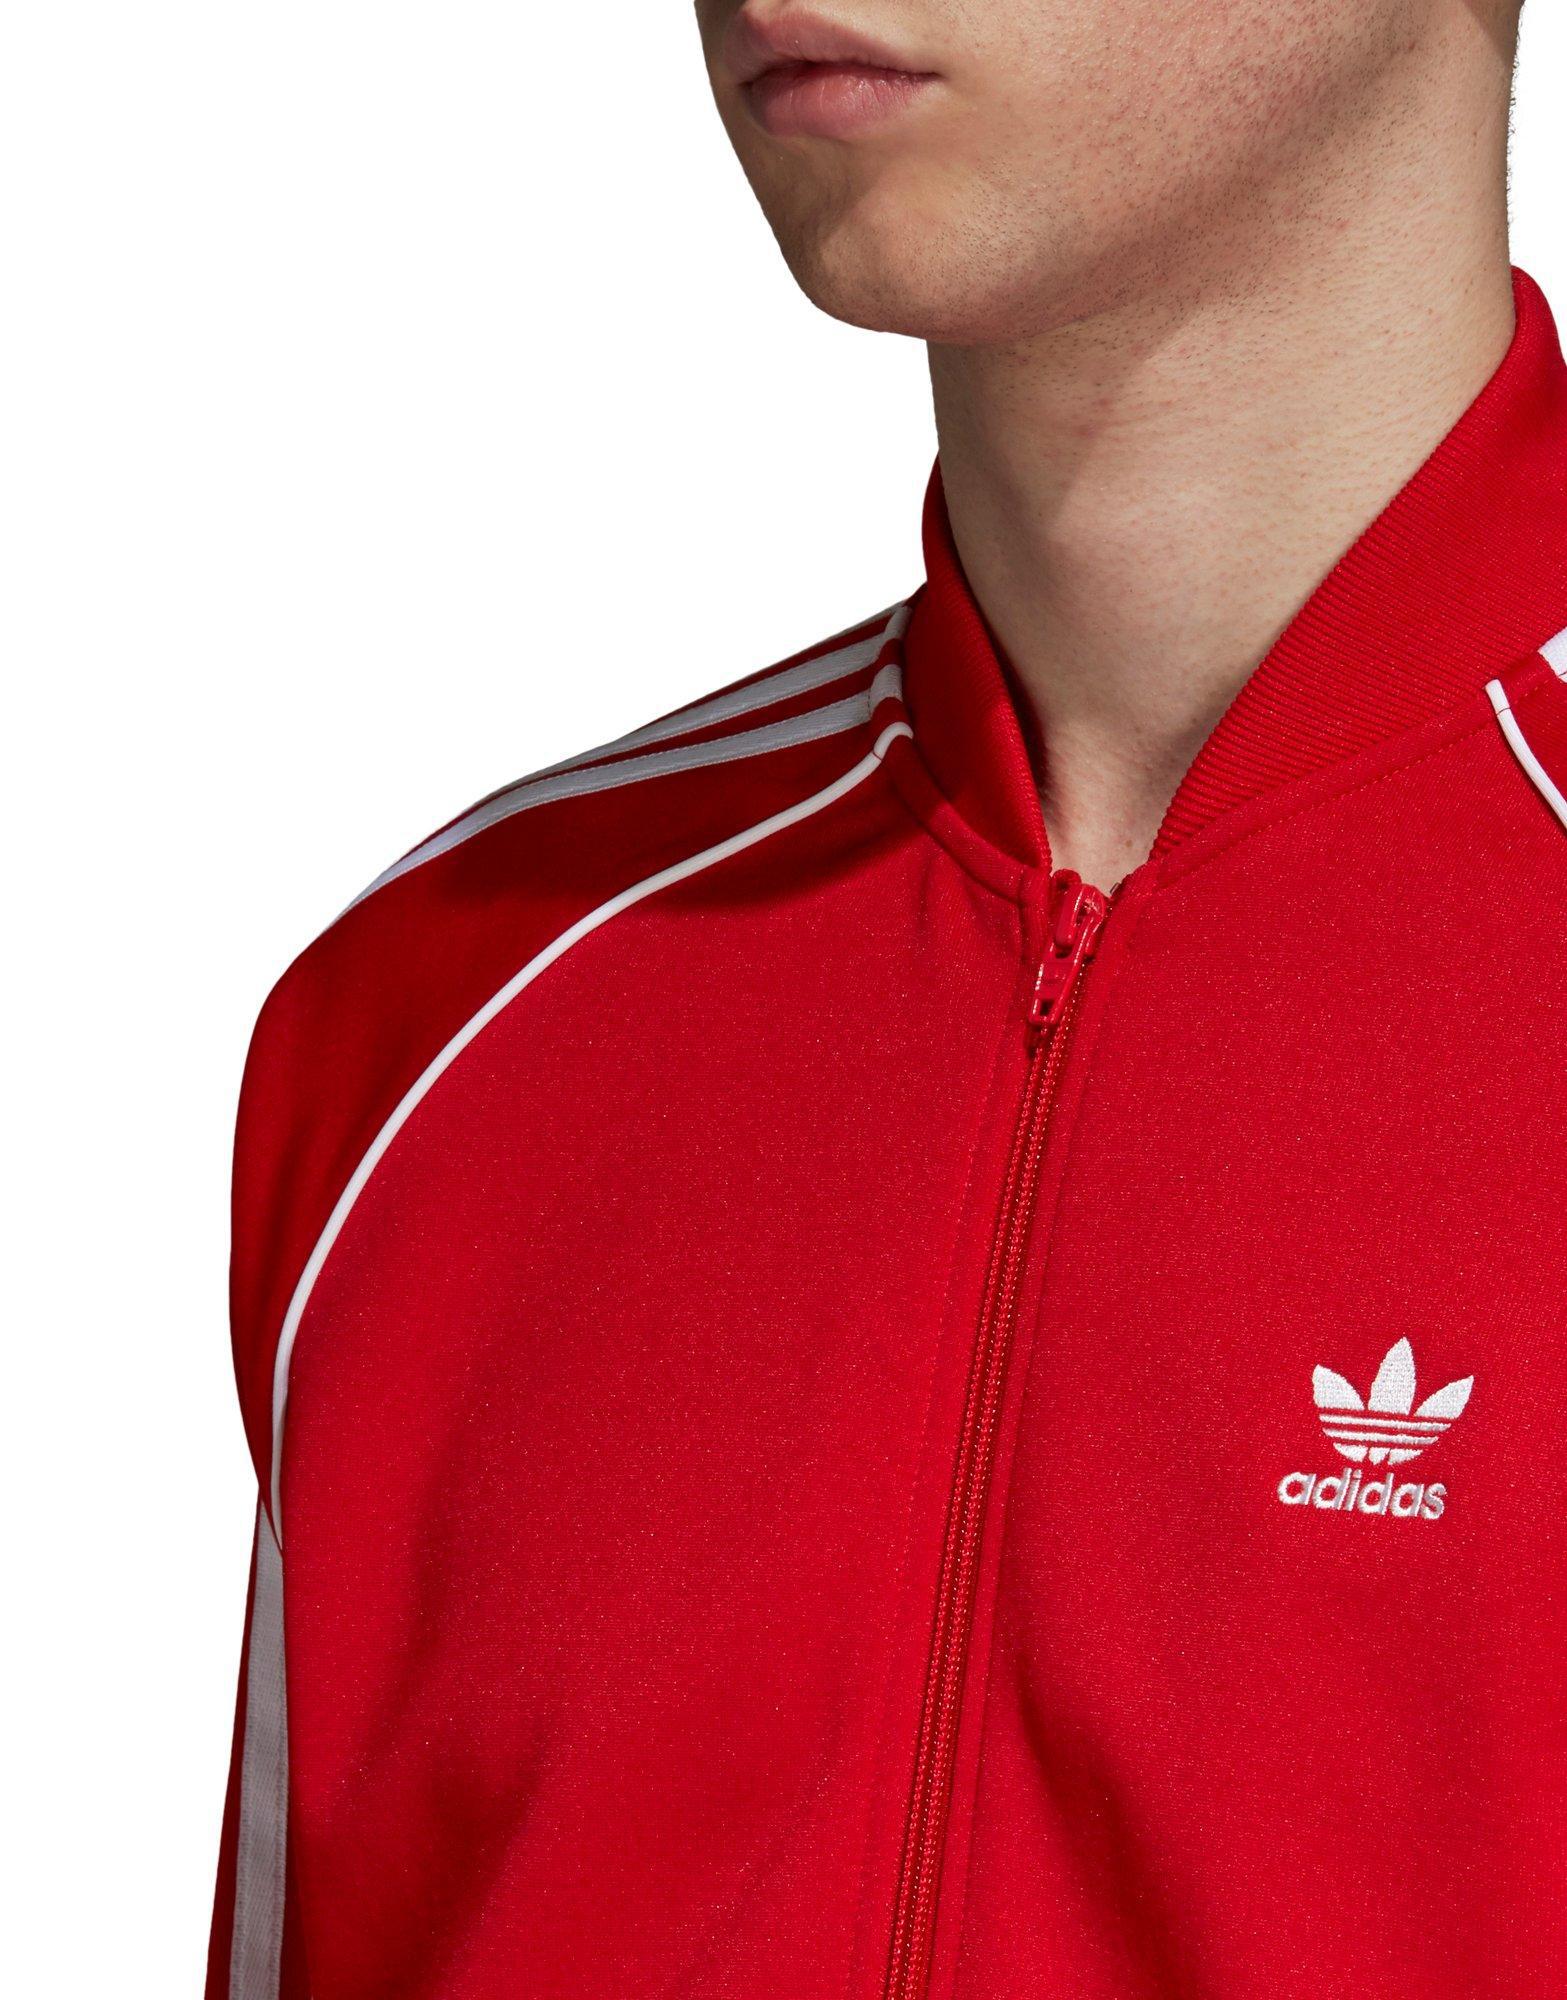 adidas Sst Track Jacket in Scarlet (Red) for Men - Lyst